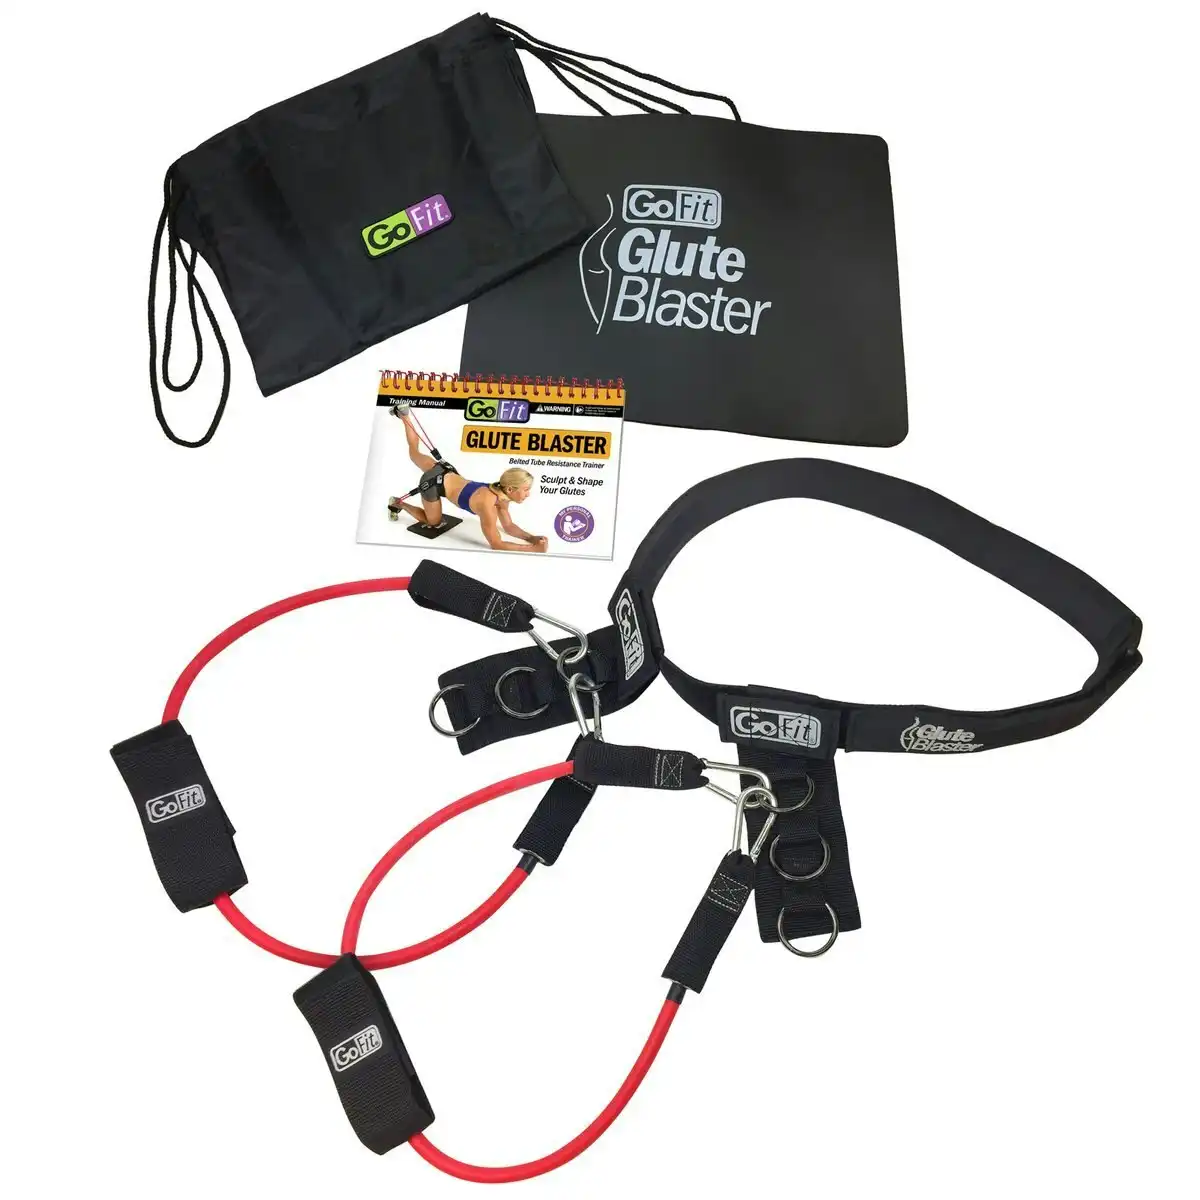 Gofit Glute Blaster Training/Workout Exercise Belt/Resistance Tube Trainer Kit